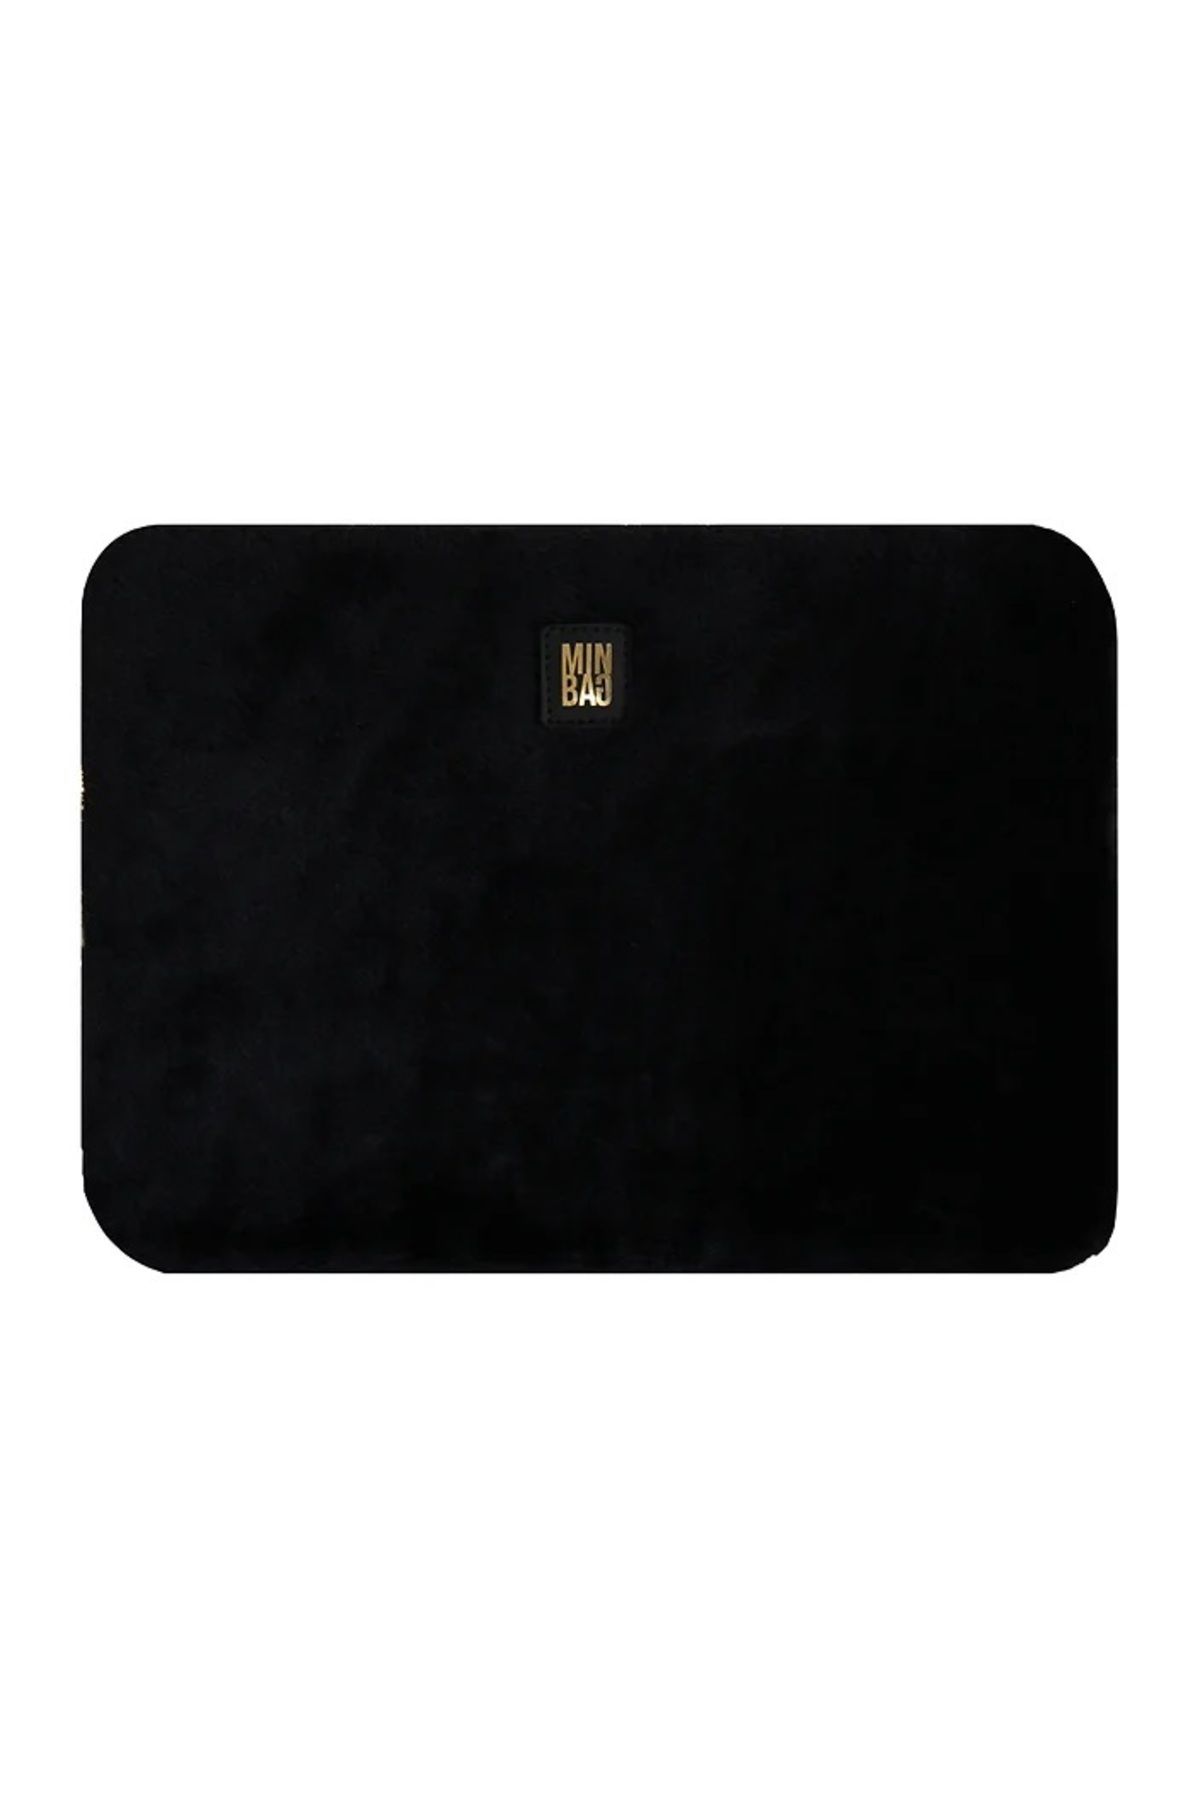 Minbag Plush Siyah Laptop Kılıfı 13'' 572-03